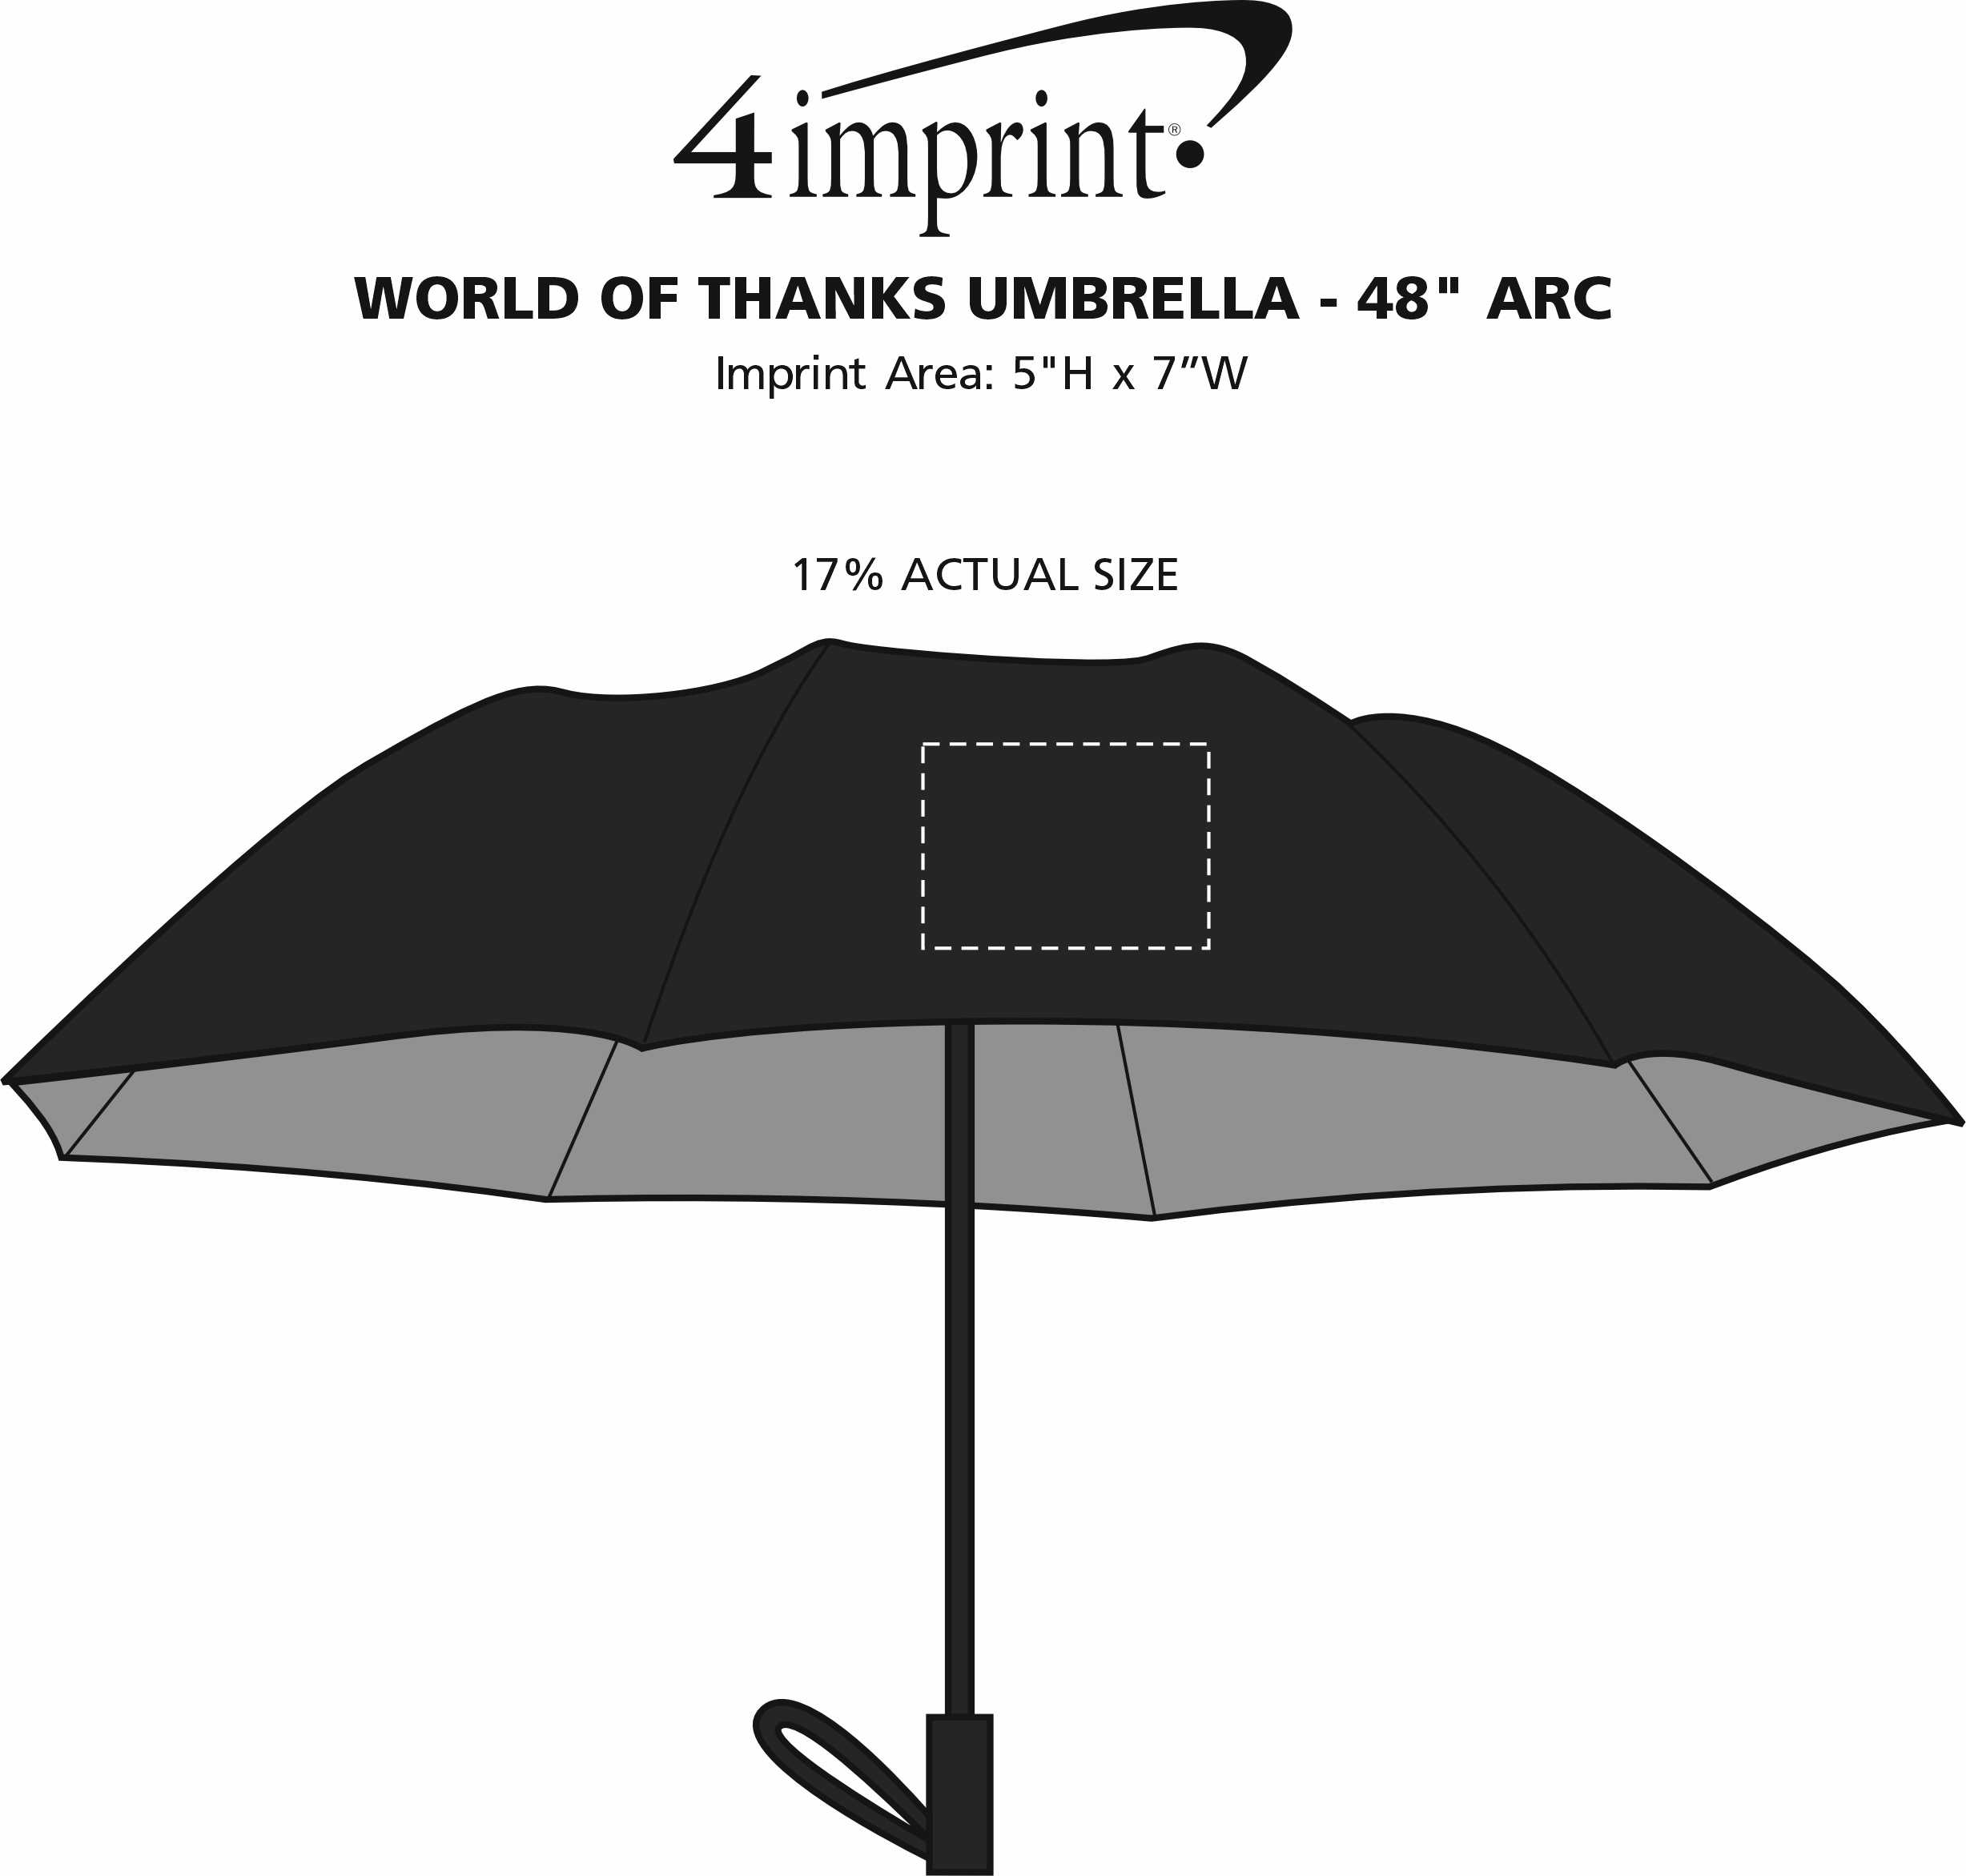 Imprint Area of World of Thanks Umbrella - 48" Arc